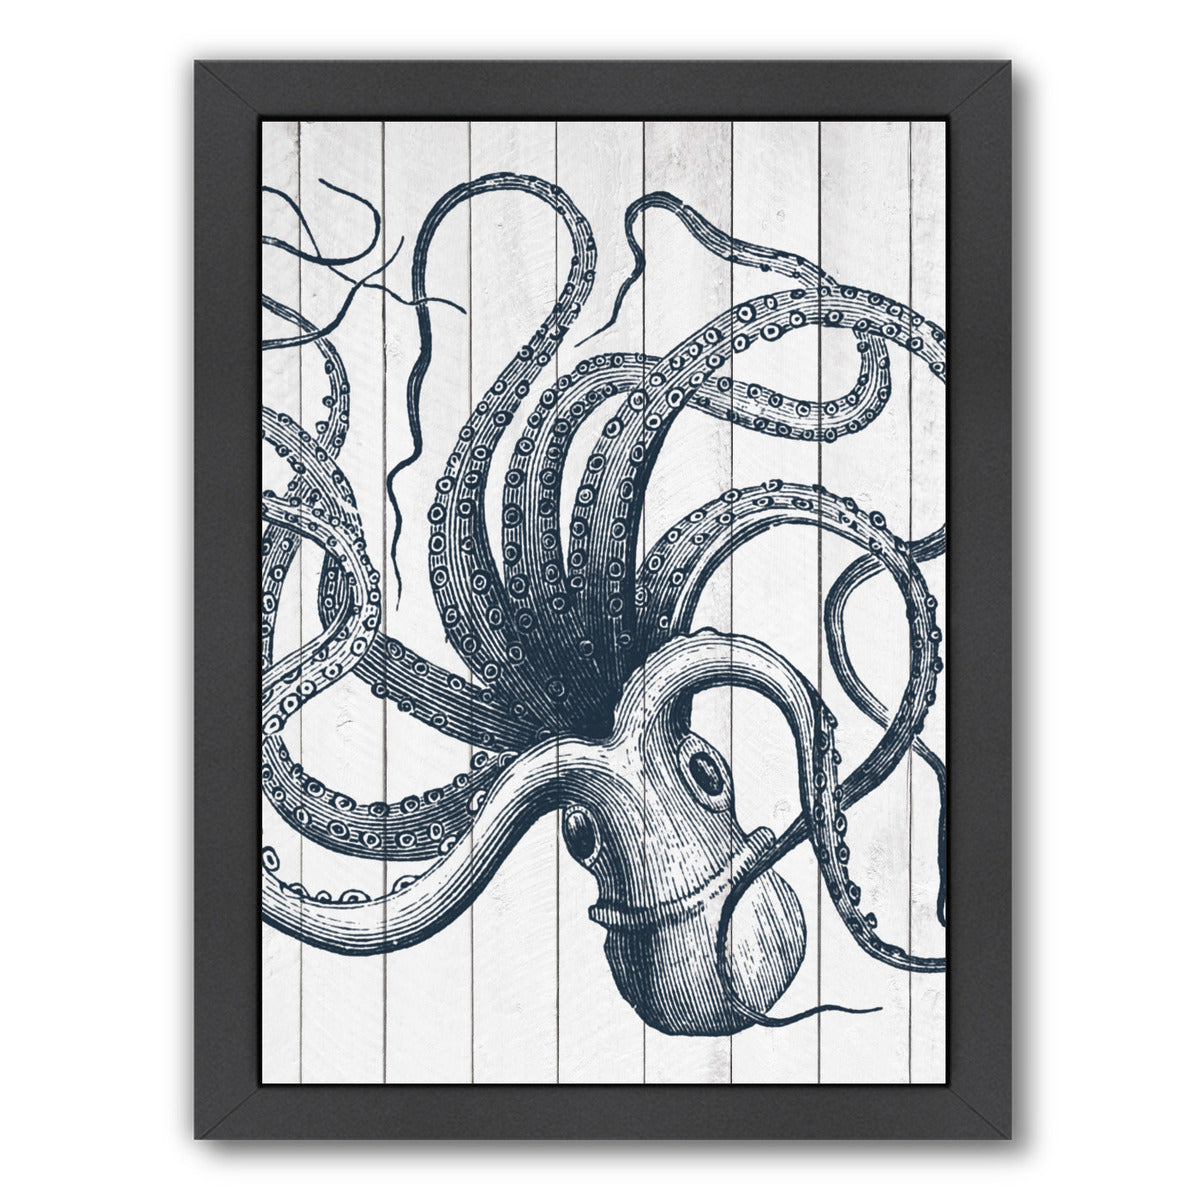 Wood Octopus by Samantha Ranlet Framed Print - Americanflat